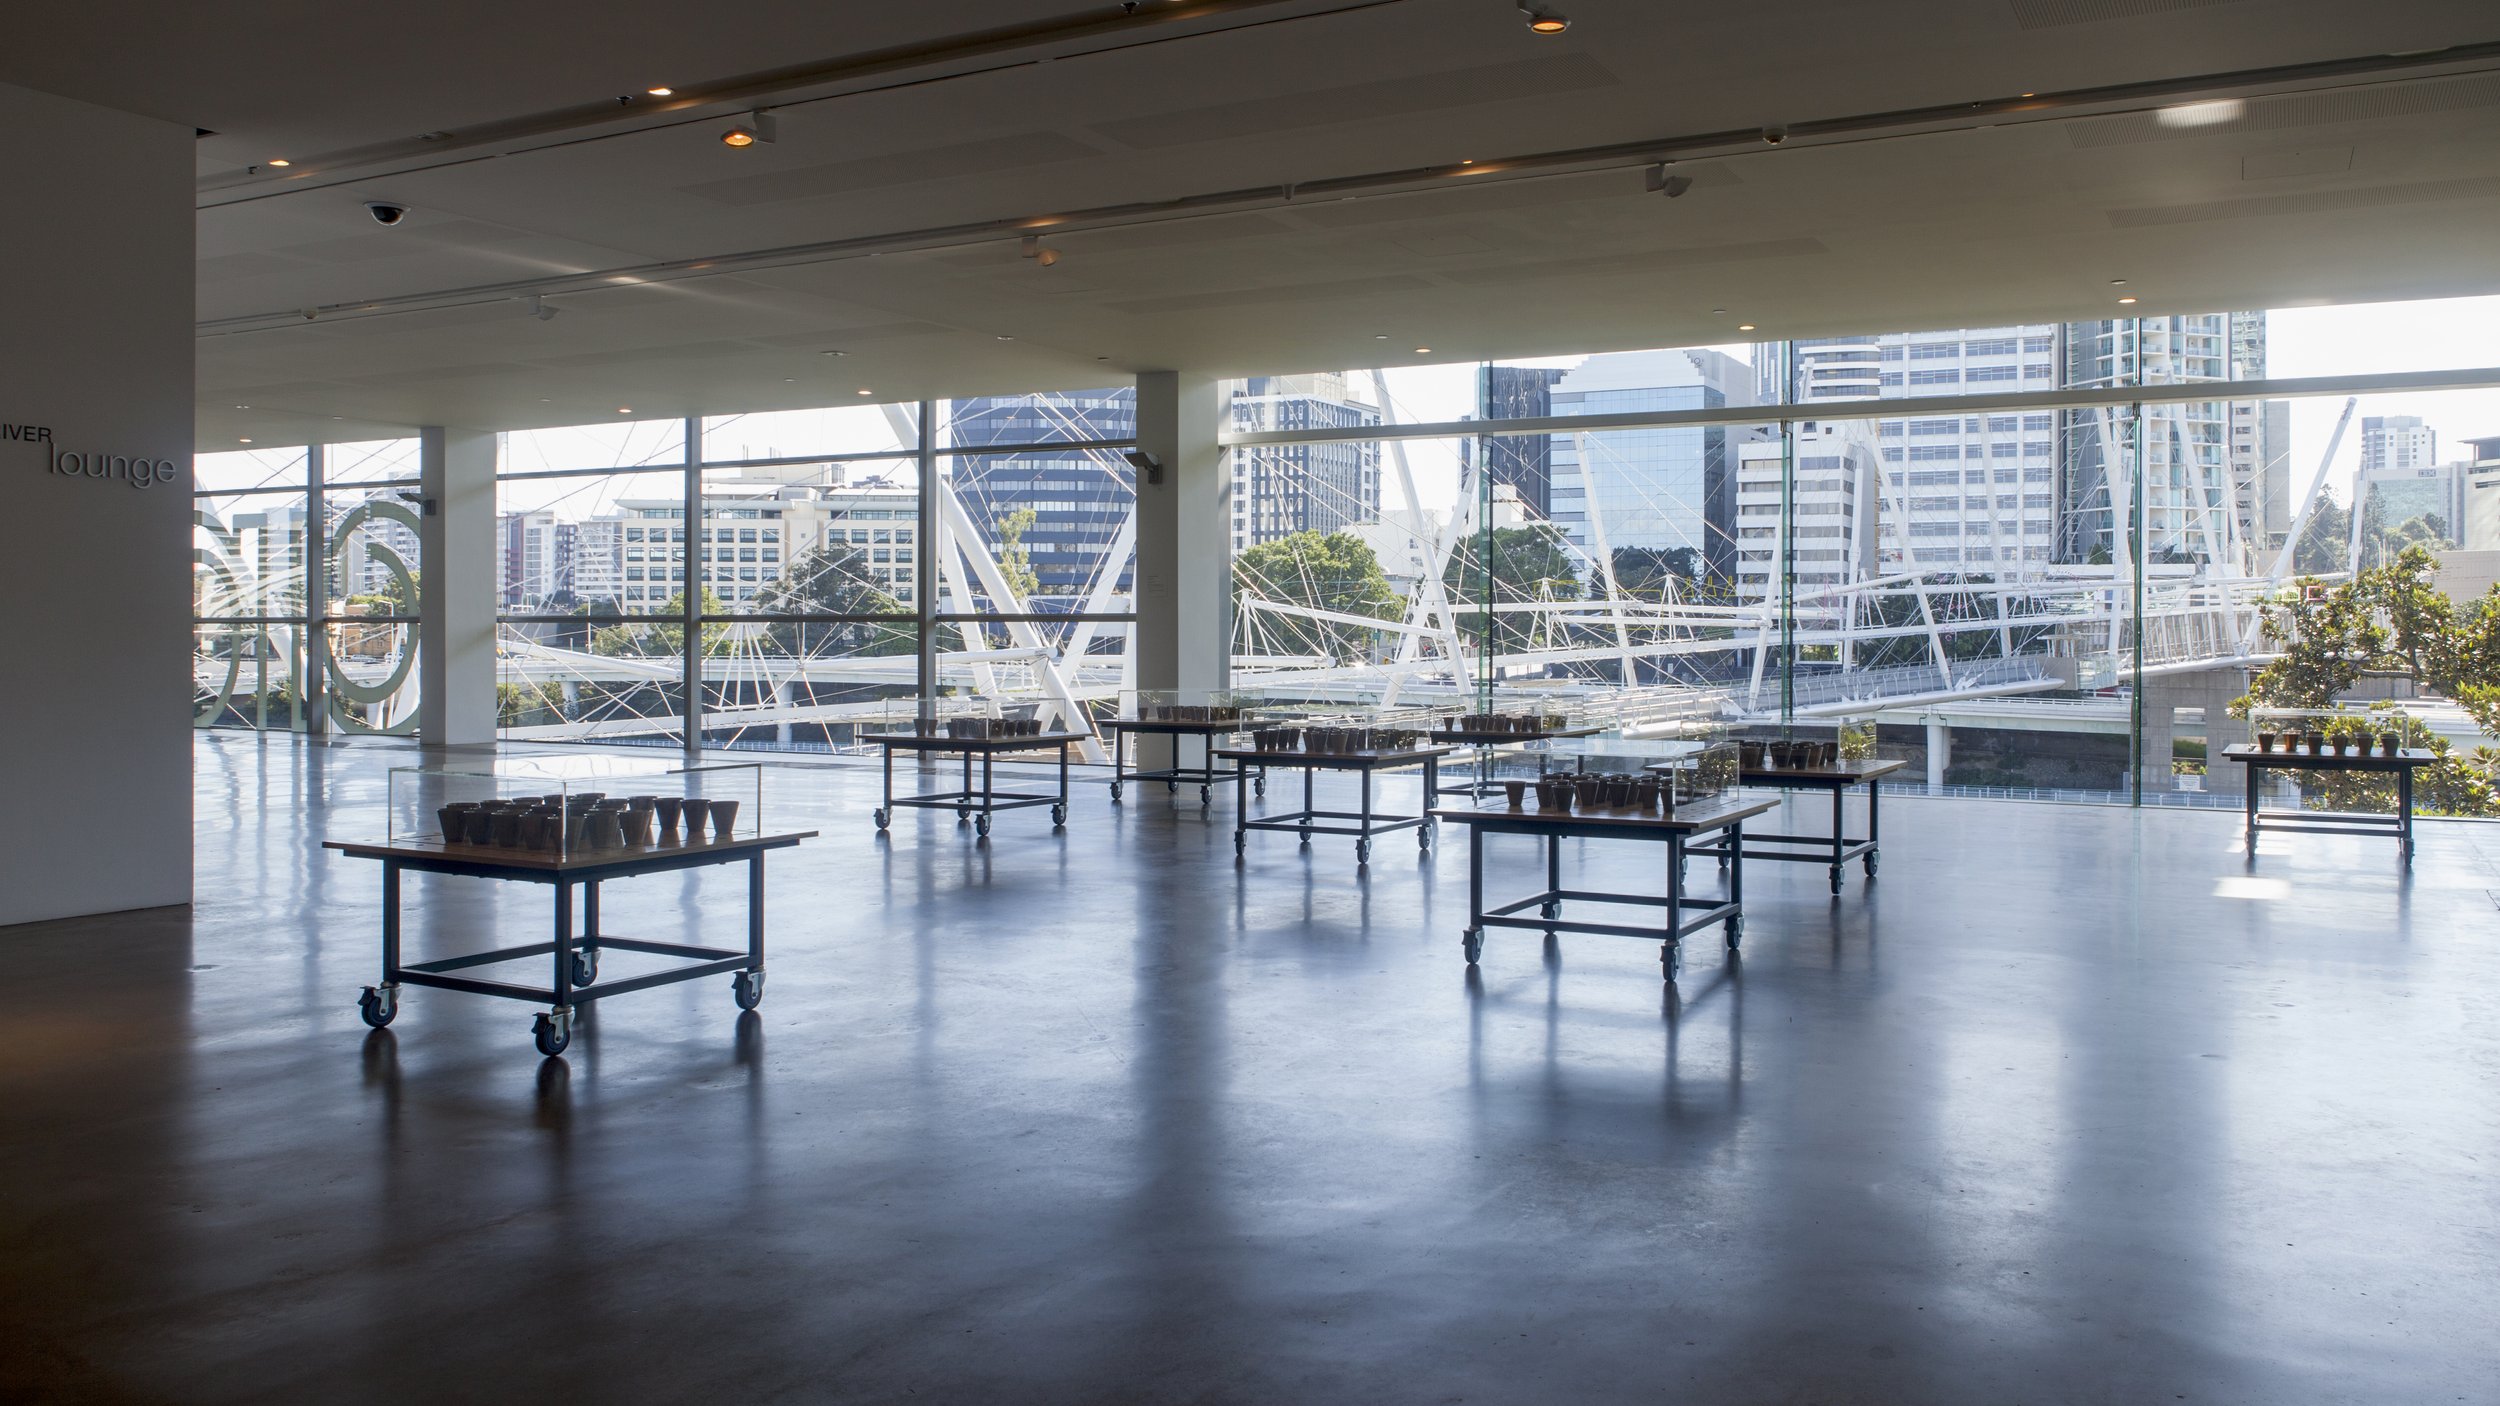   Coordinating Space  Queensland Art Gallery of Modern Art, Brisbane 2015 